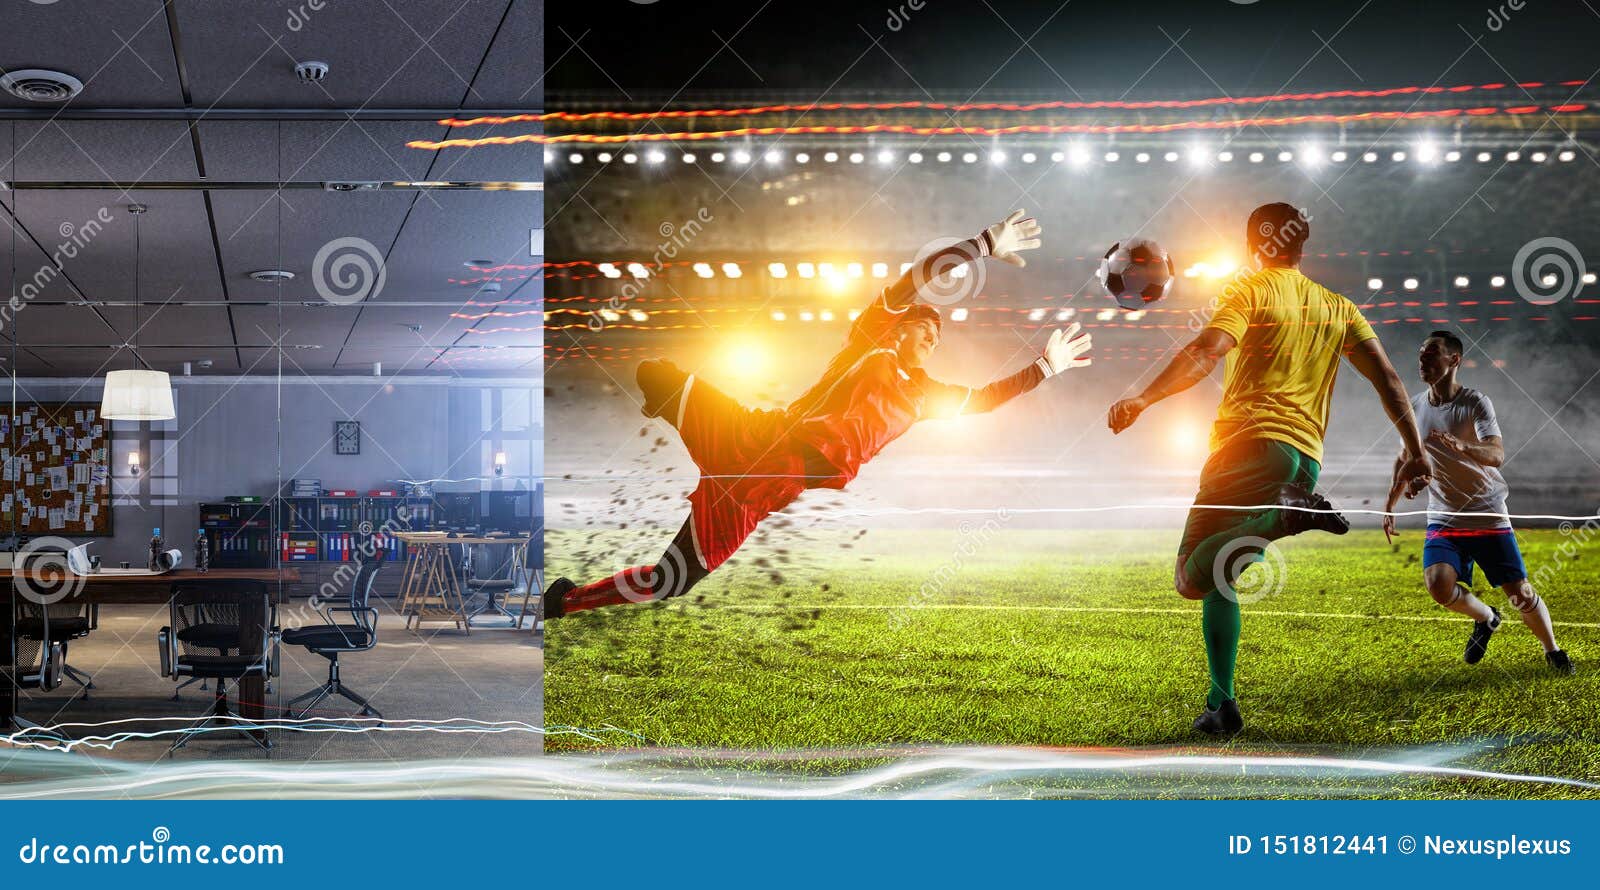 Real Room Vs Virtual Reality Stadium Football Game Stock Image